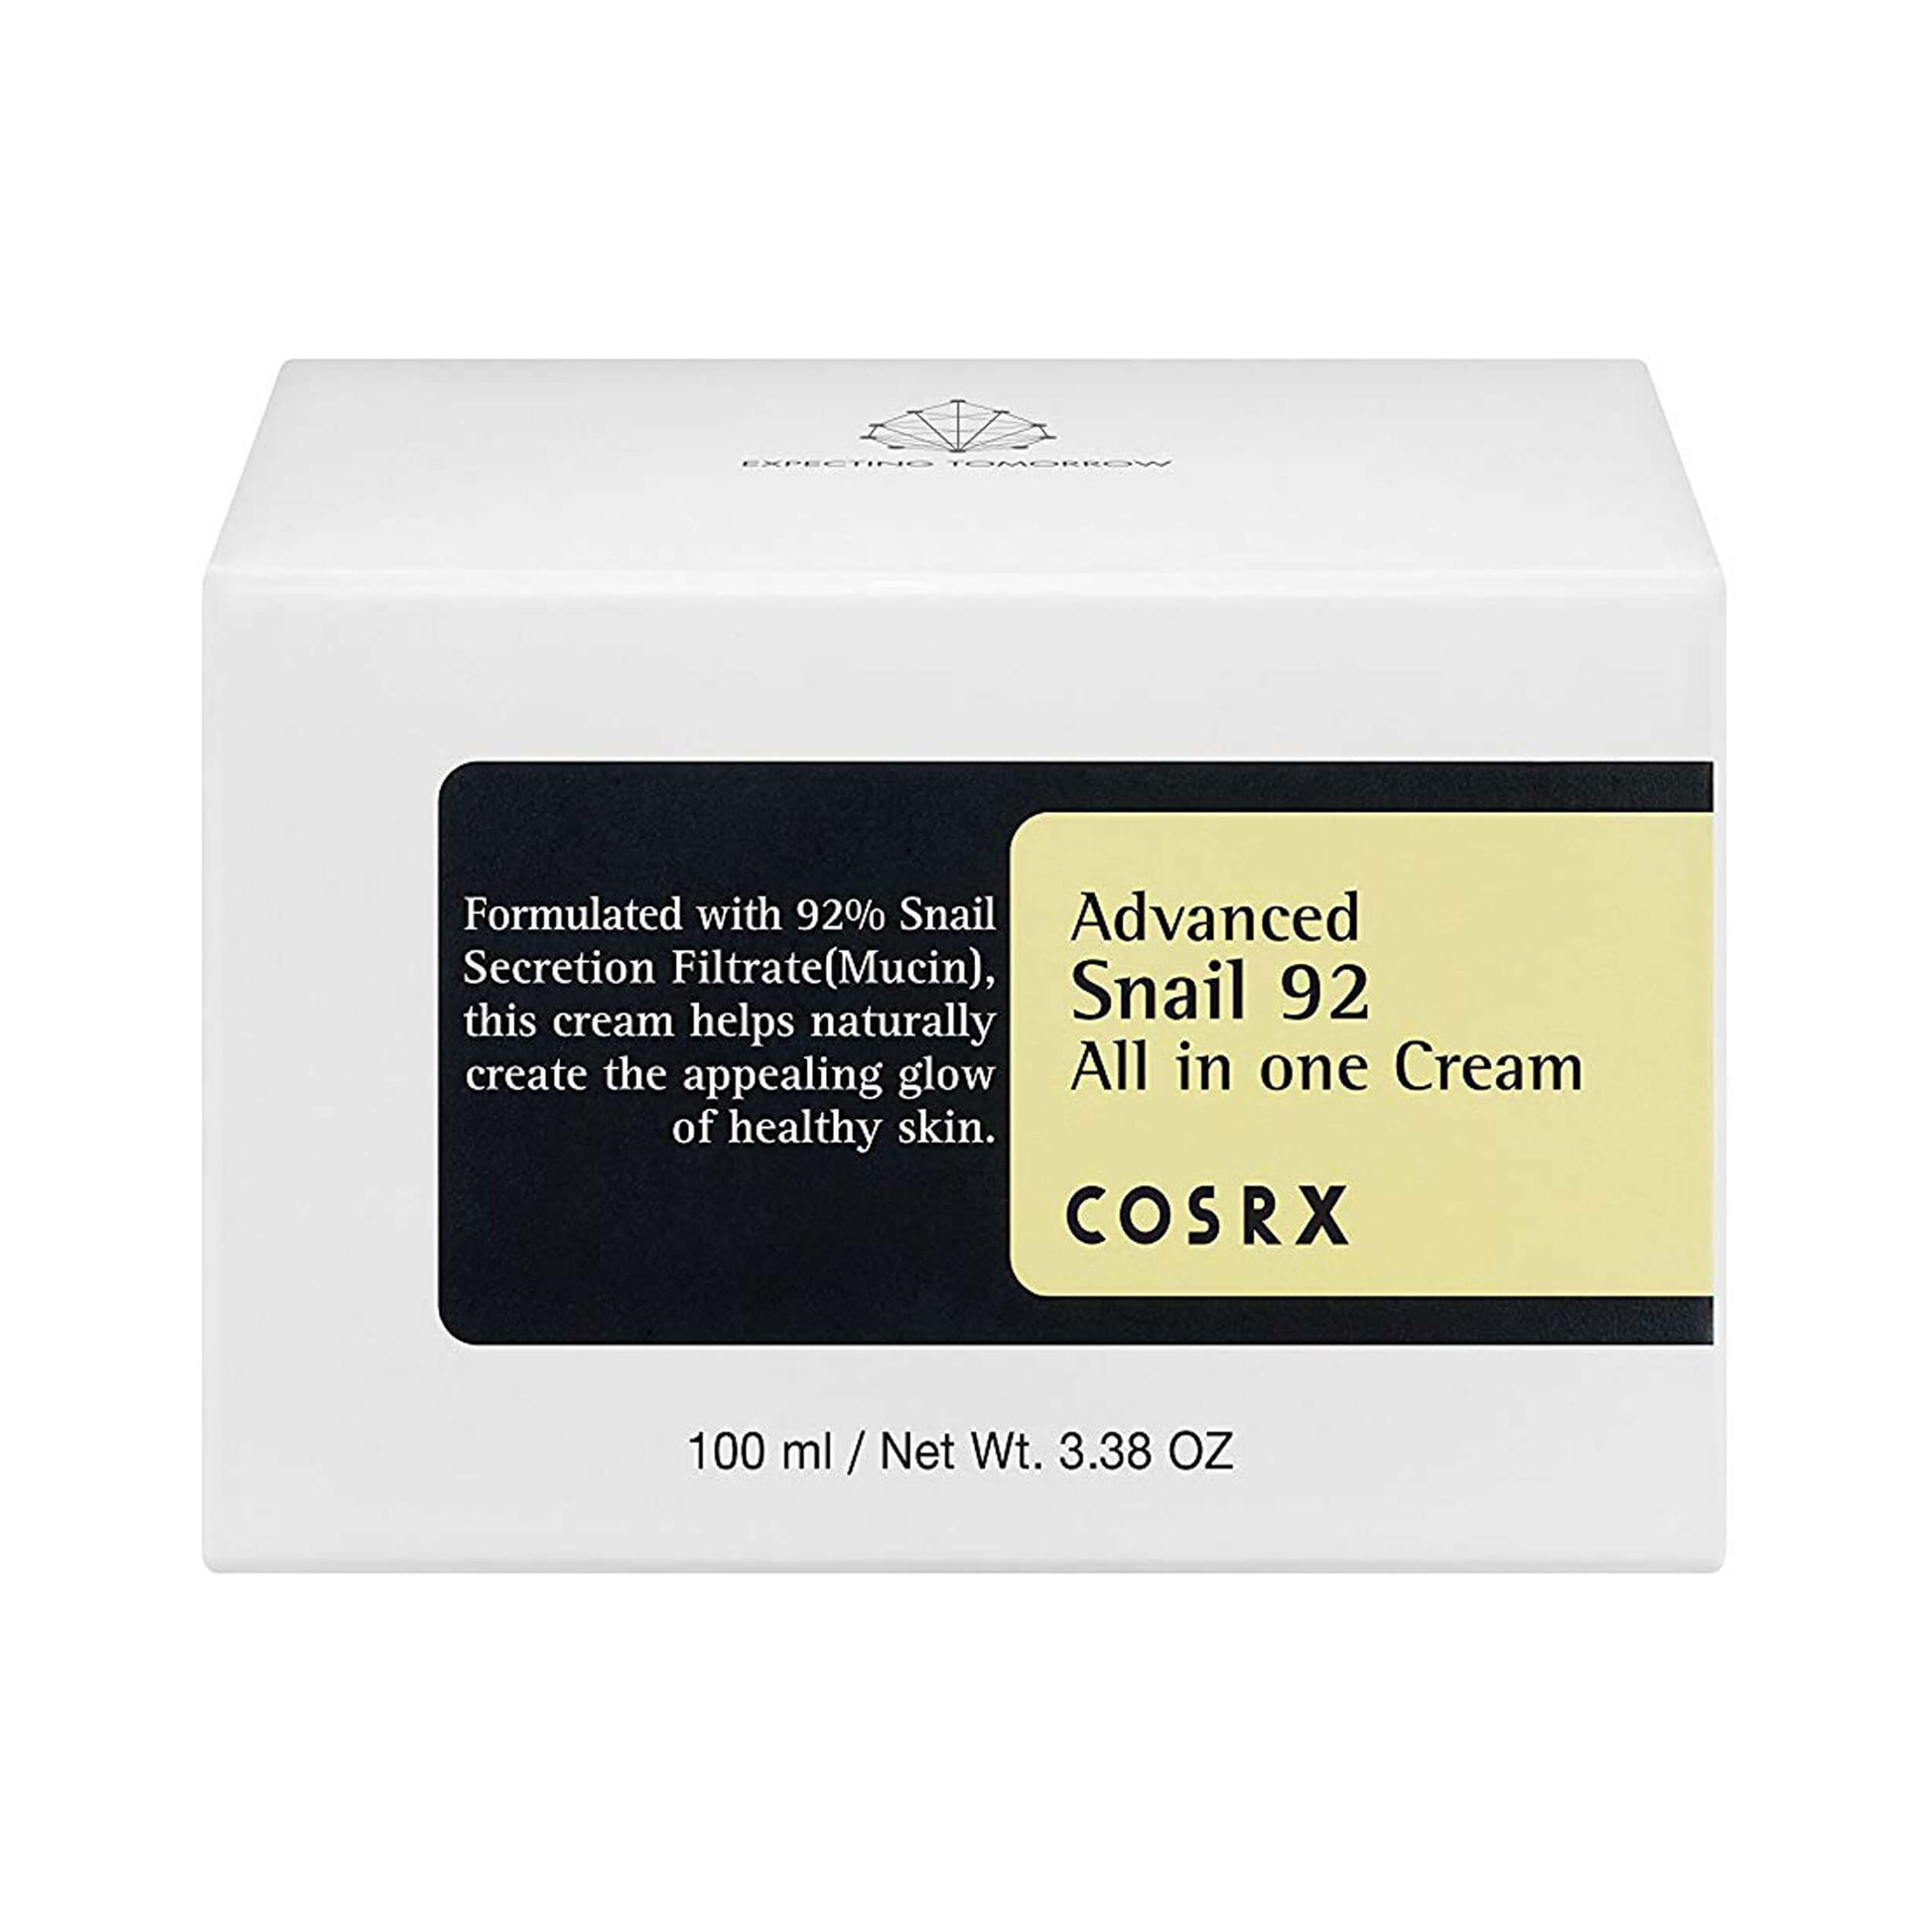 Cosrx Advanced Snail 92 All in One Cream 100g